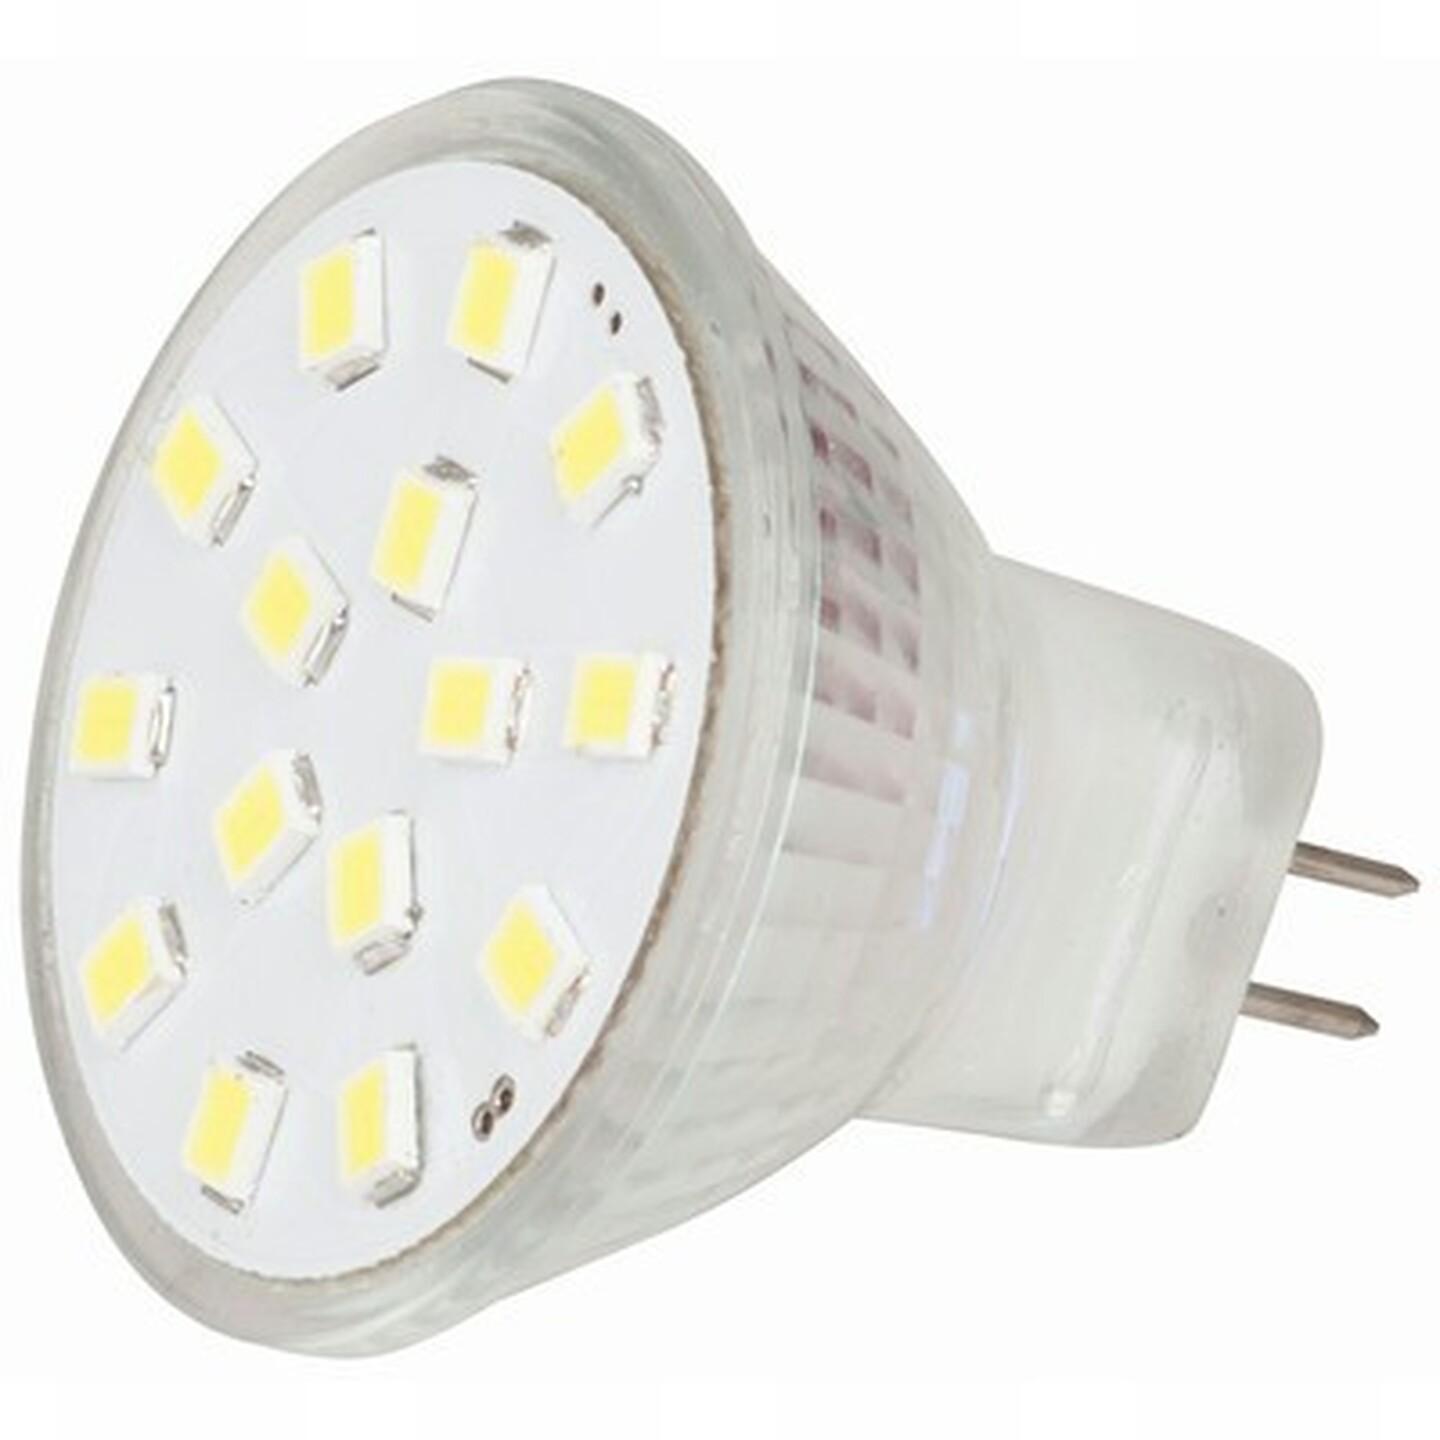 MR11 LED Replacement Light 15x2385 LEDs 120 12VAC/DC Warm White